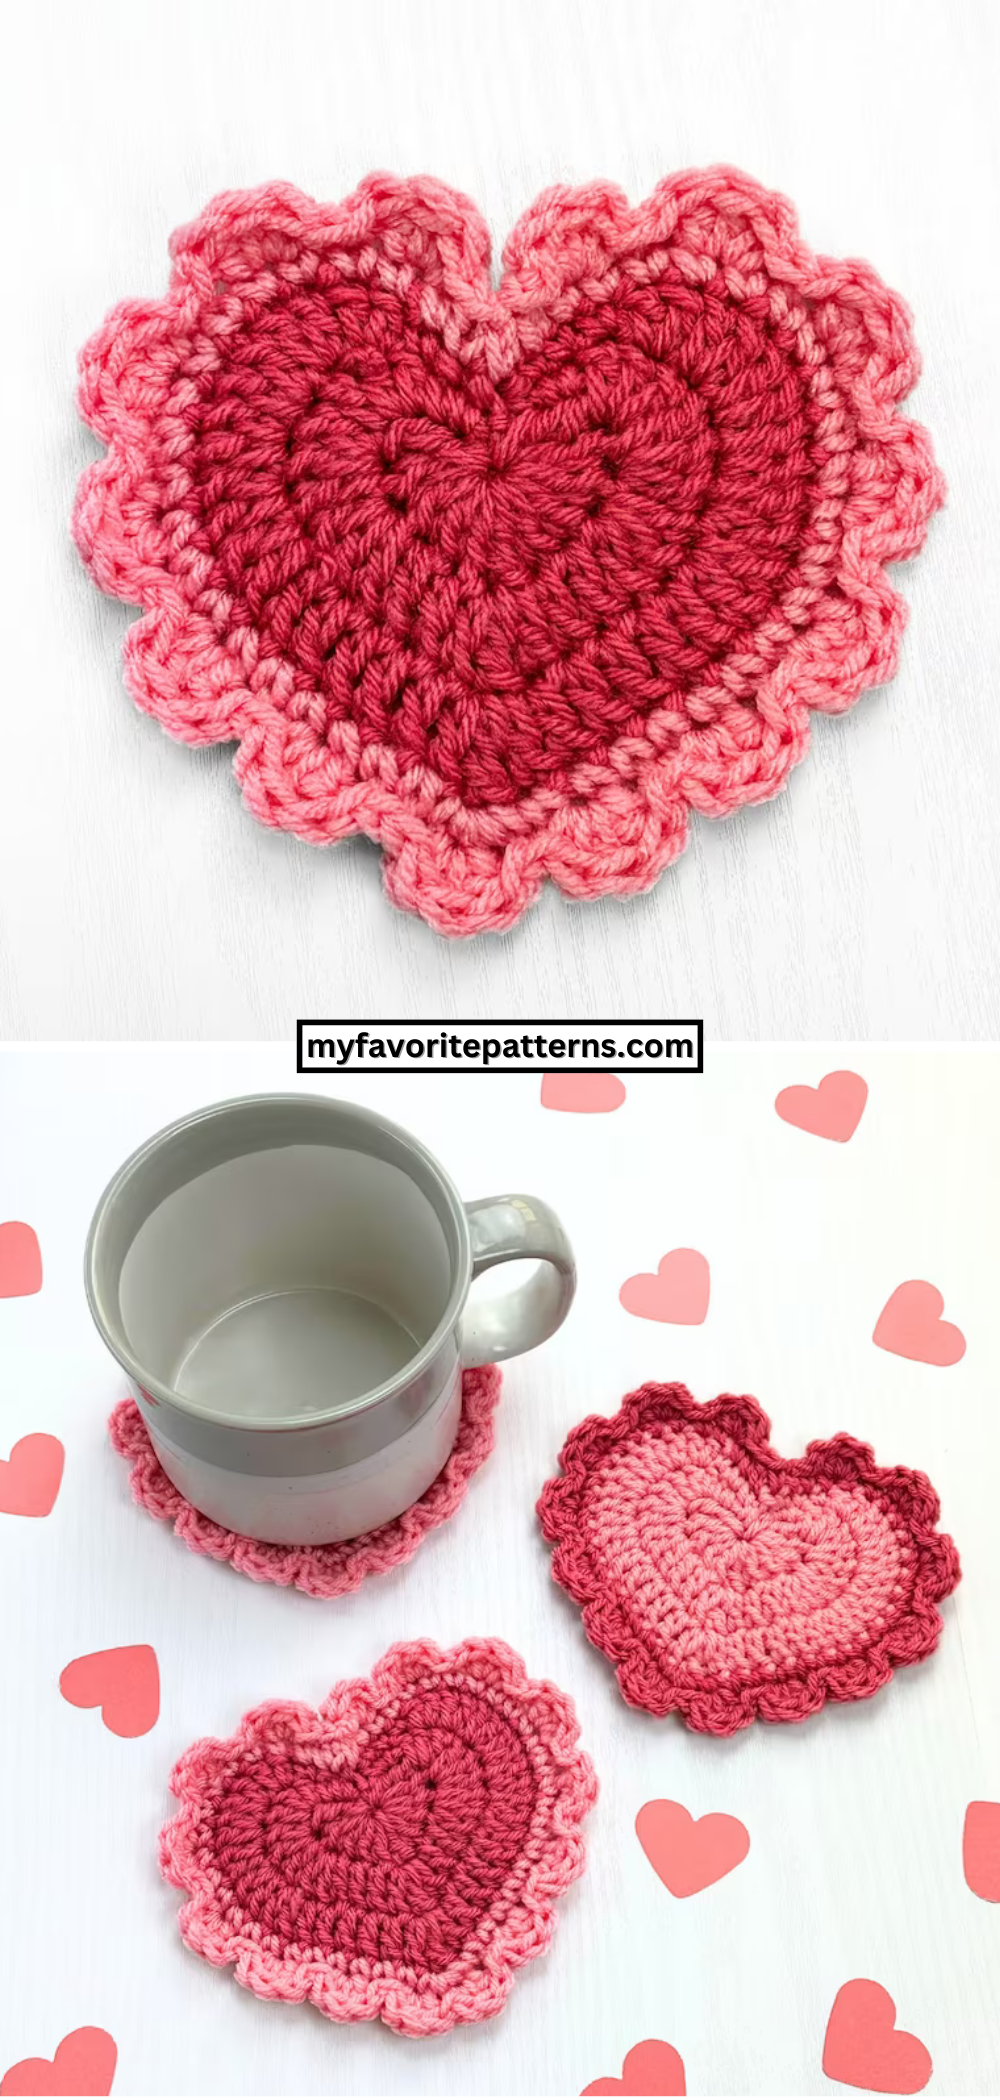 Easy Crochet Patterns For Beginners - MyFavoritePatterns